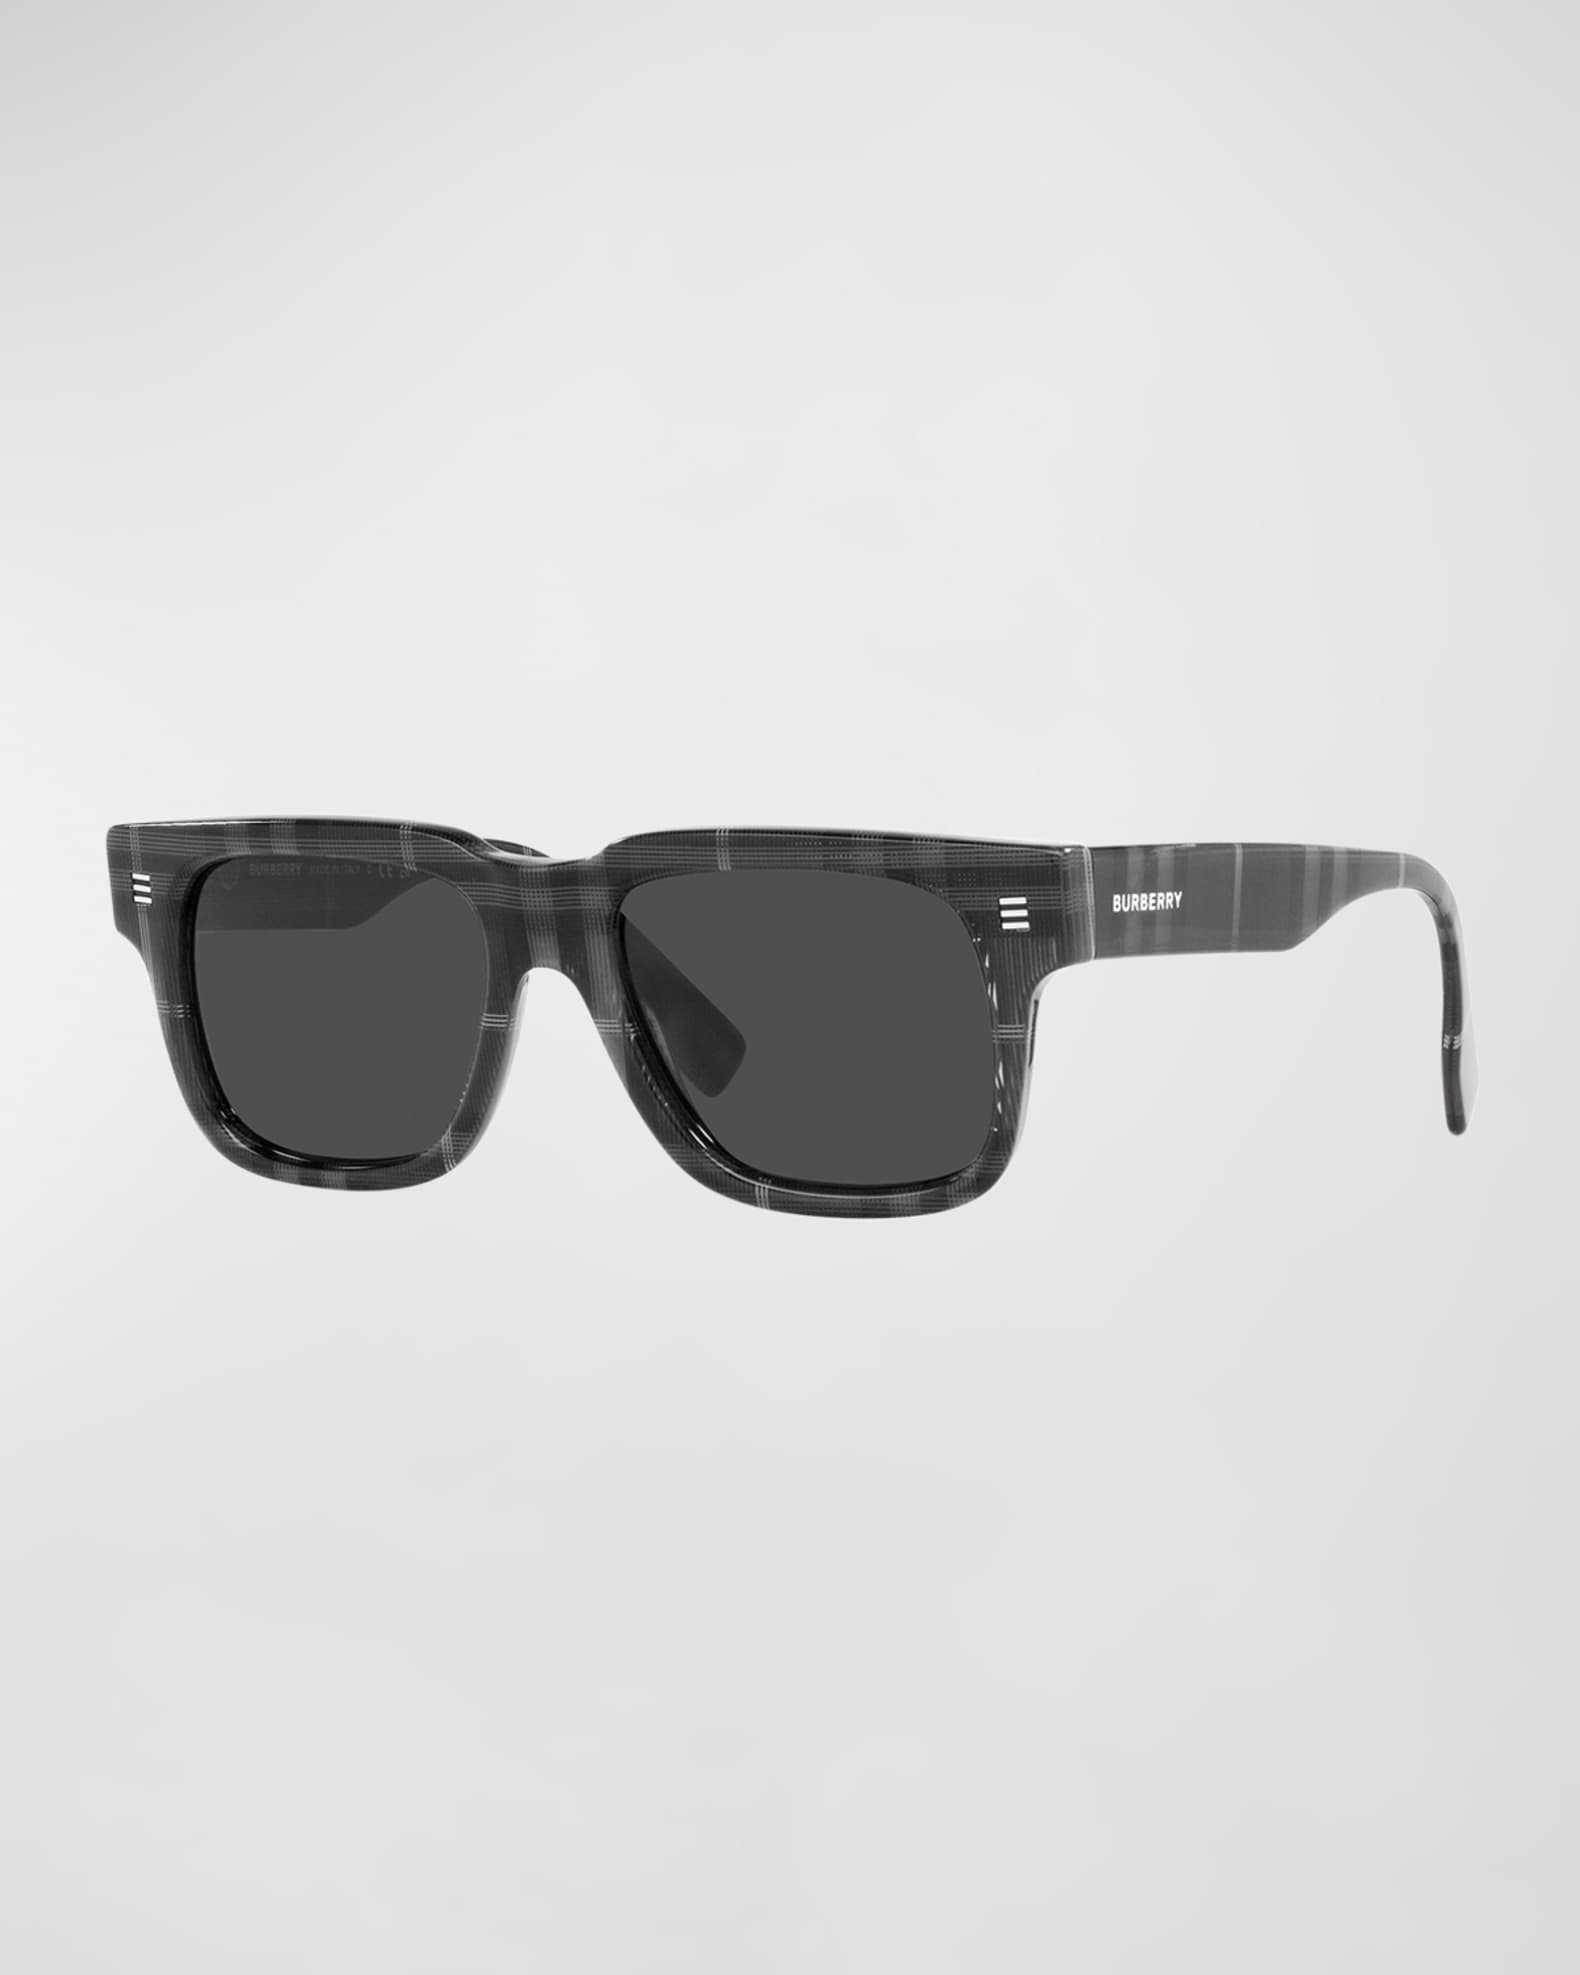 Burberry Men's Abstract Metal Sunglasses